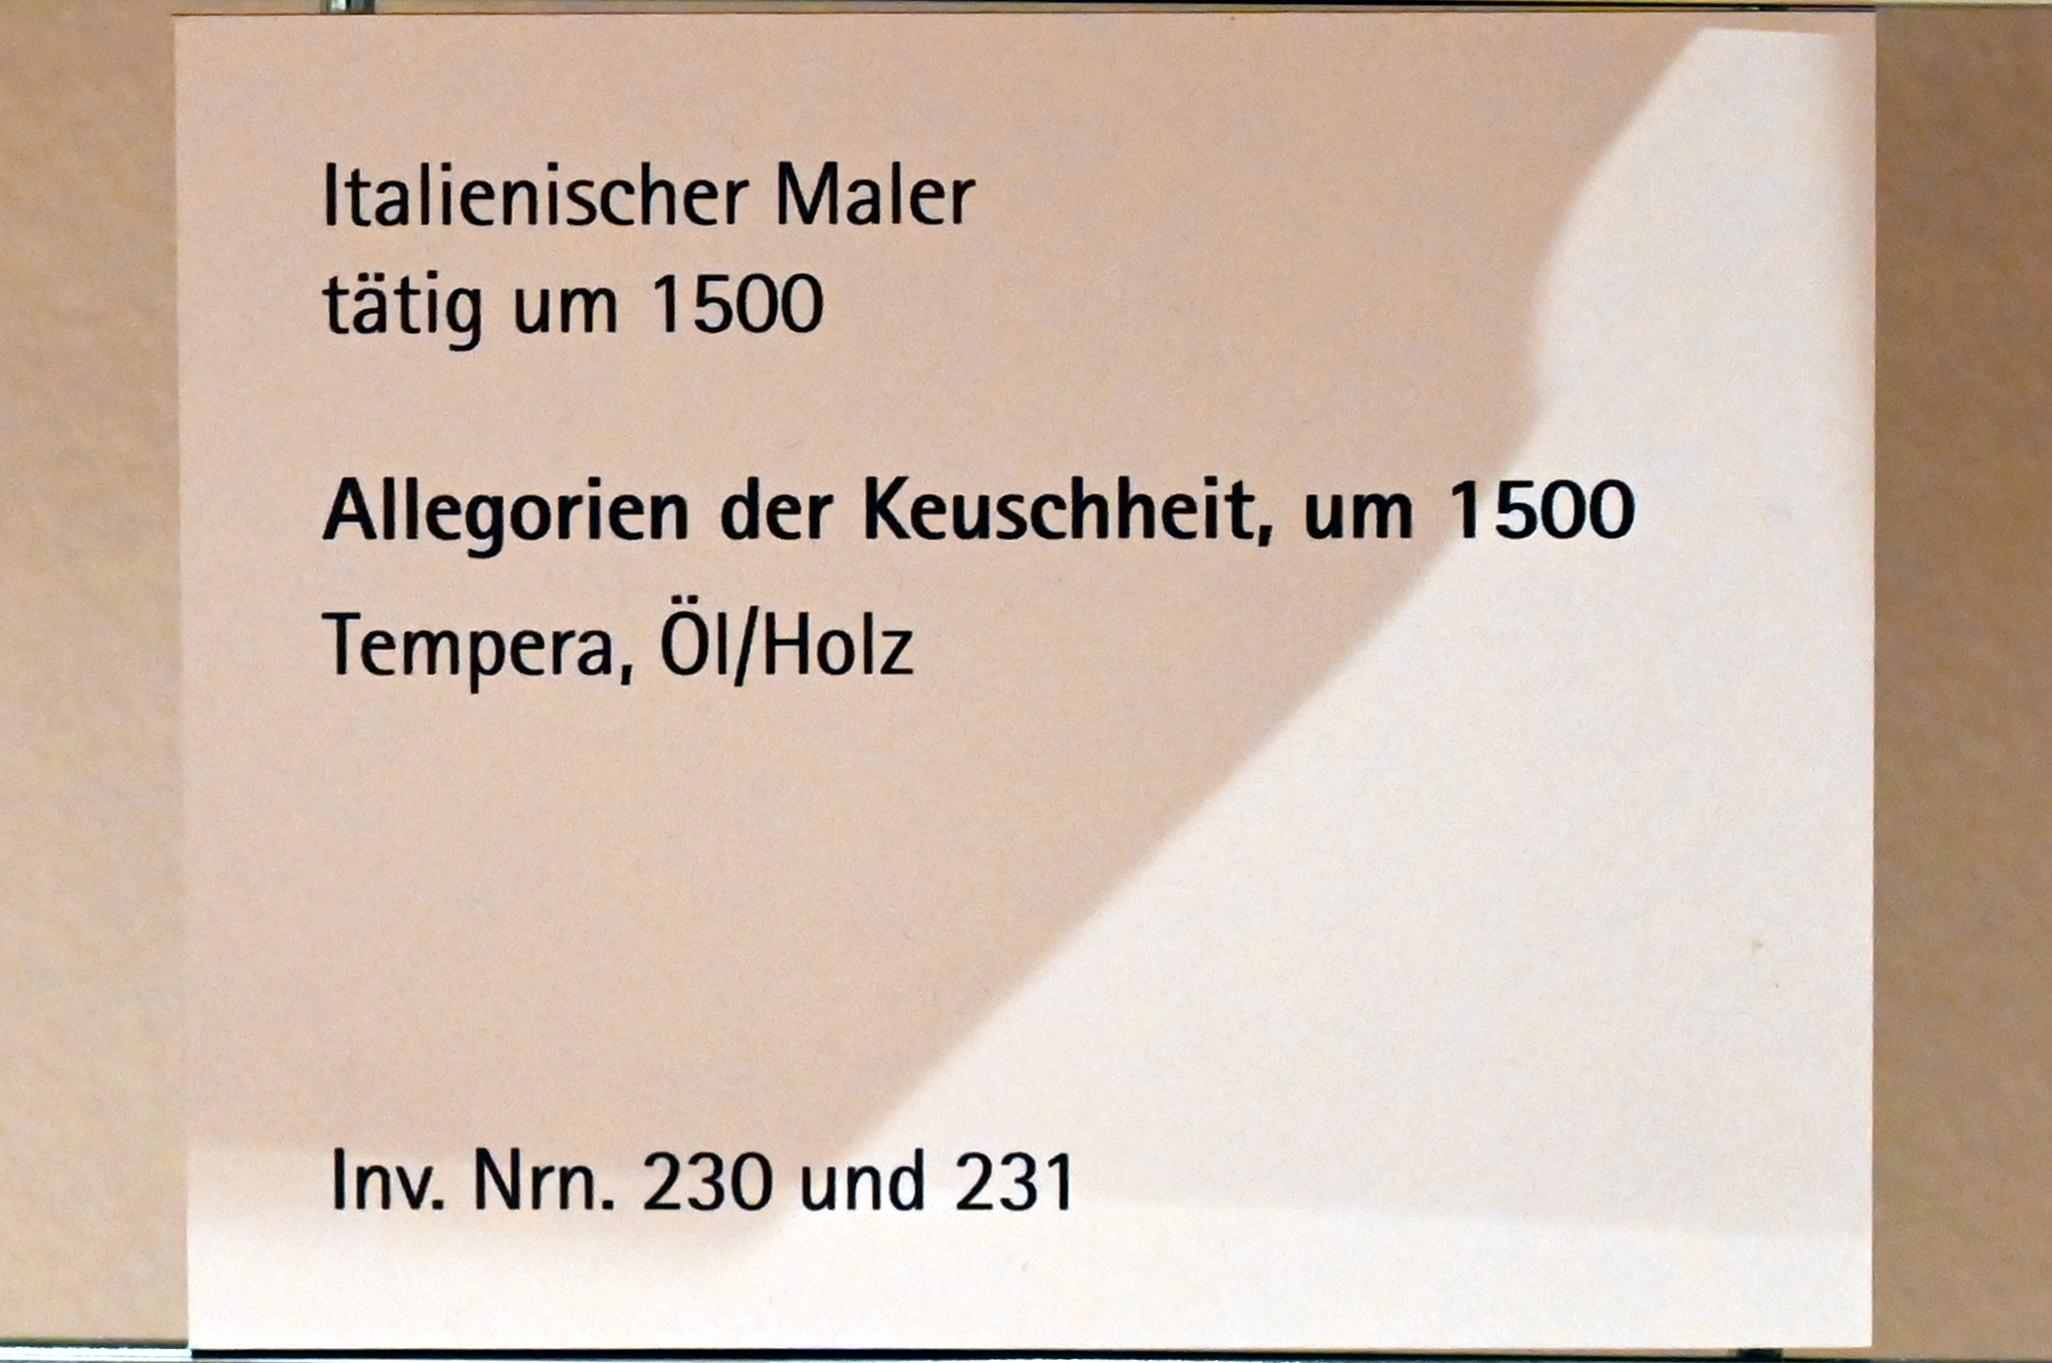 Allegorie der Keuschheit, Mainz, Landesmuseum, Schaudepot, um 1500, Bild 2/2